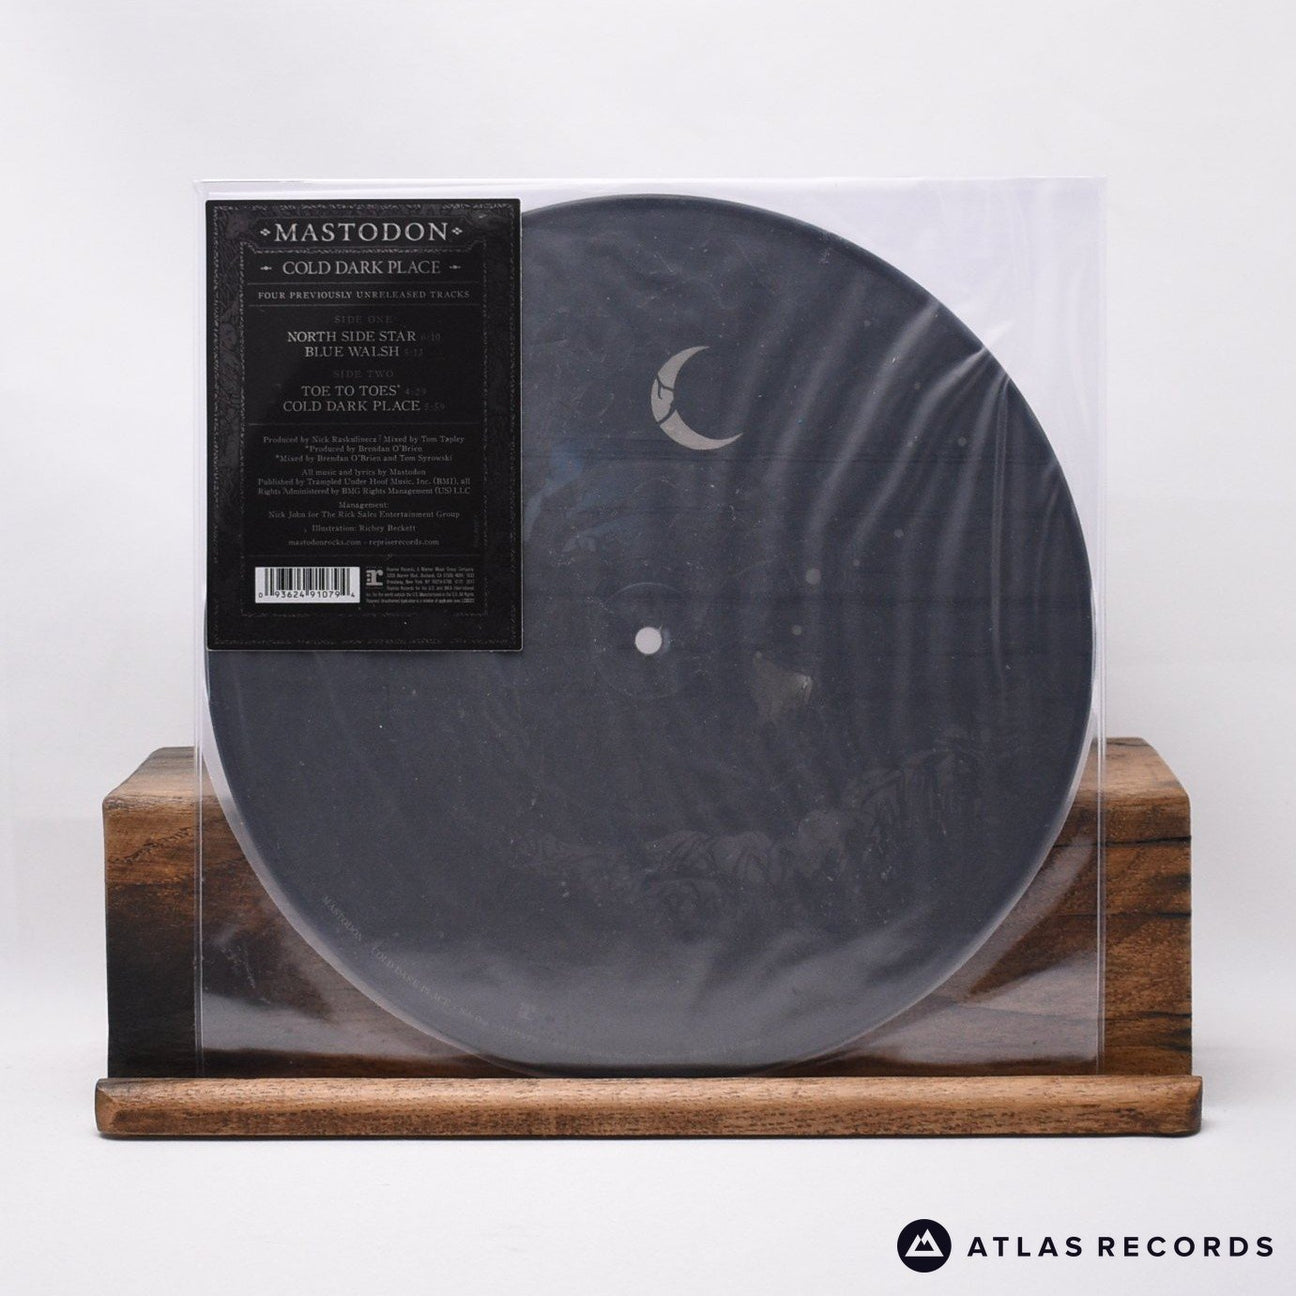 Mastodon Cold Dark Place 10" Vinyl Record - Front Cover & Record